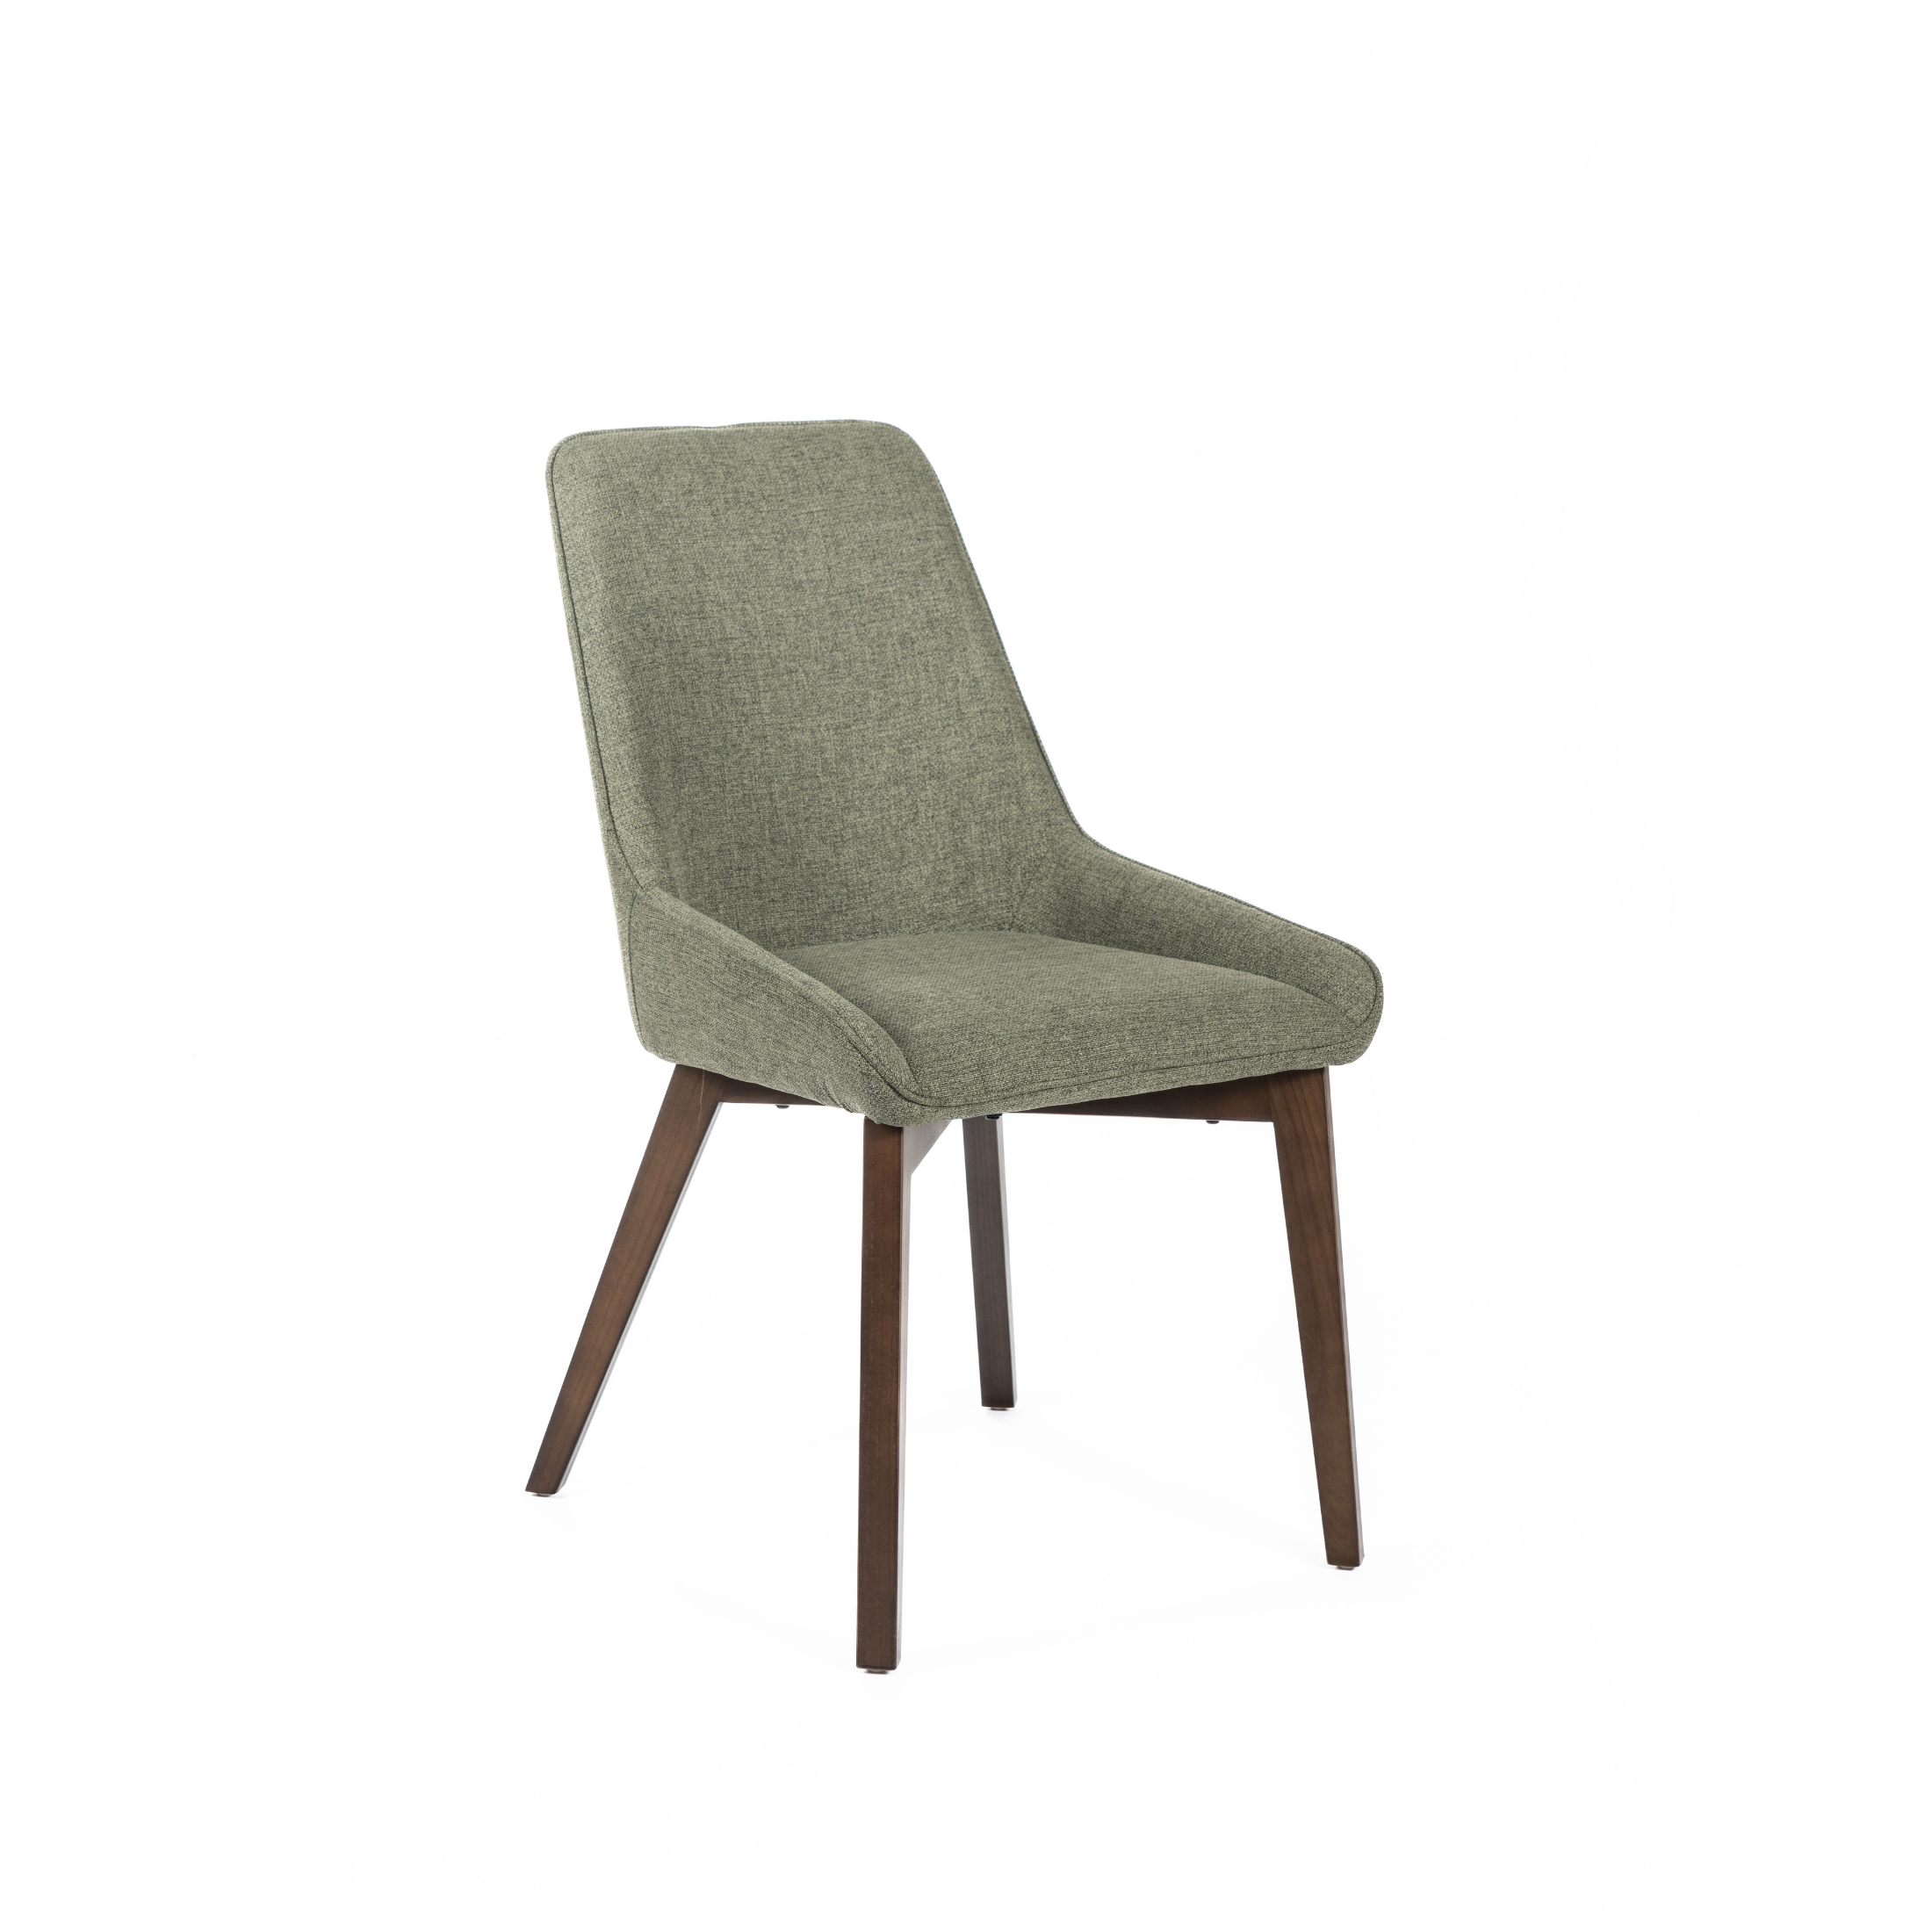 Set sedie imbottite "Vera" da soggiorno moderne in tessuto cm 49,5x62 87h